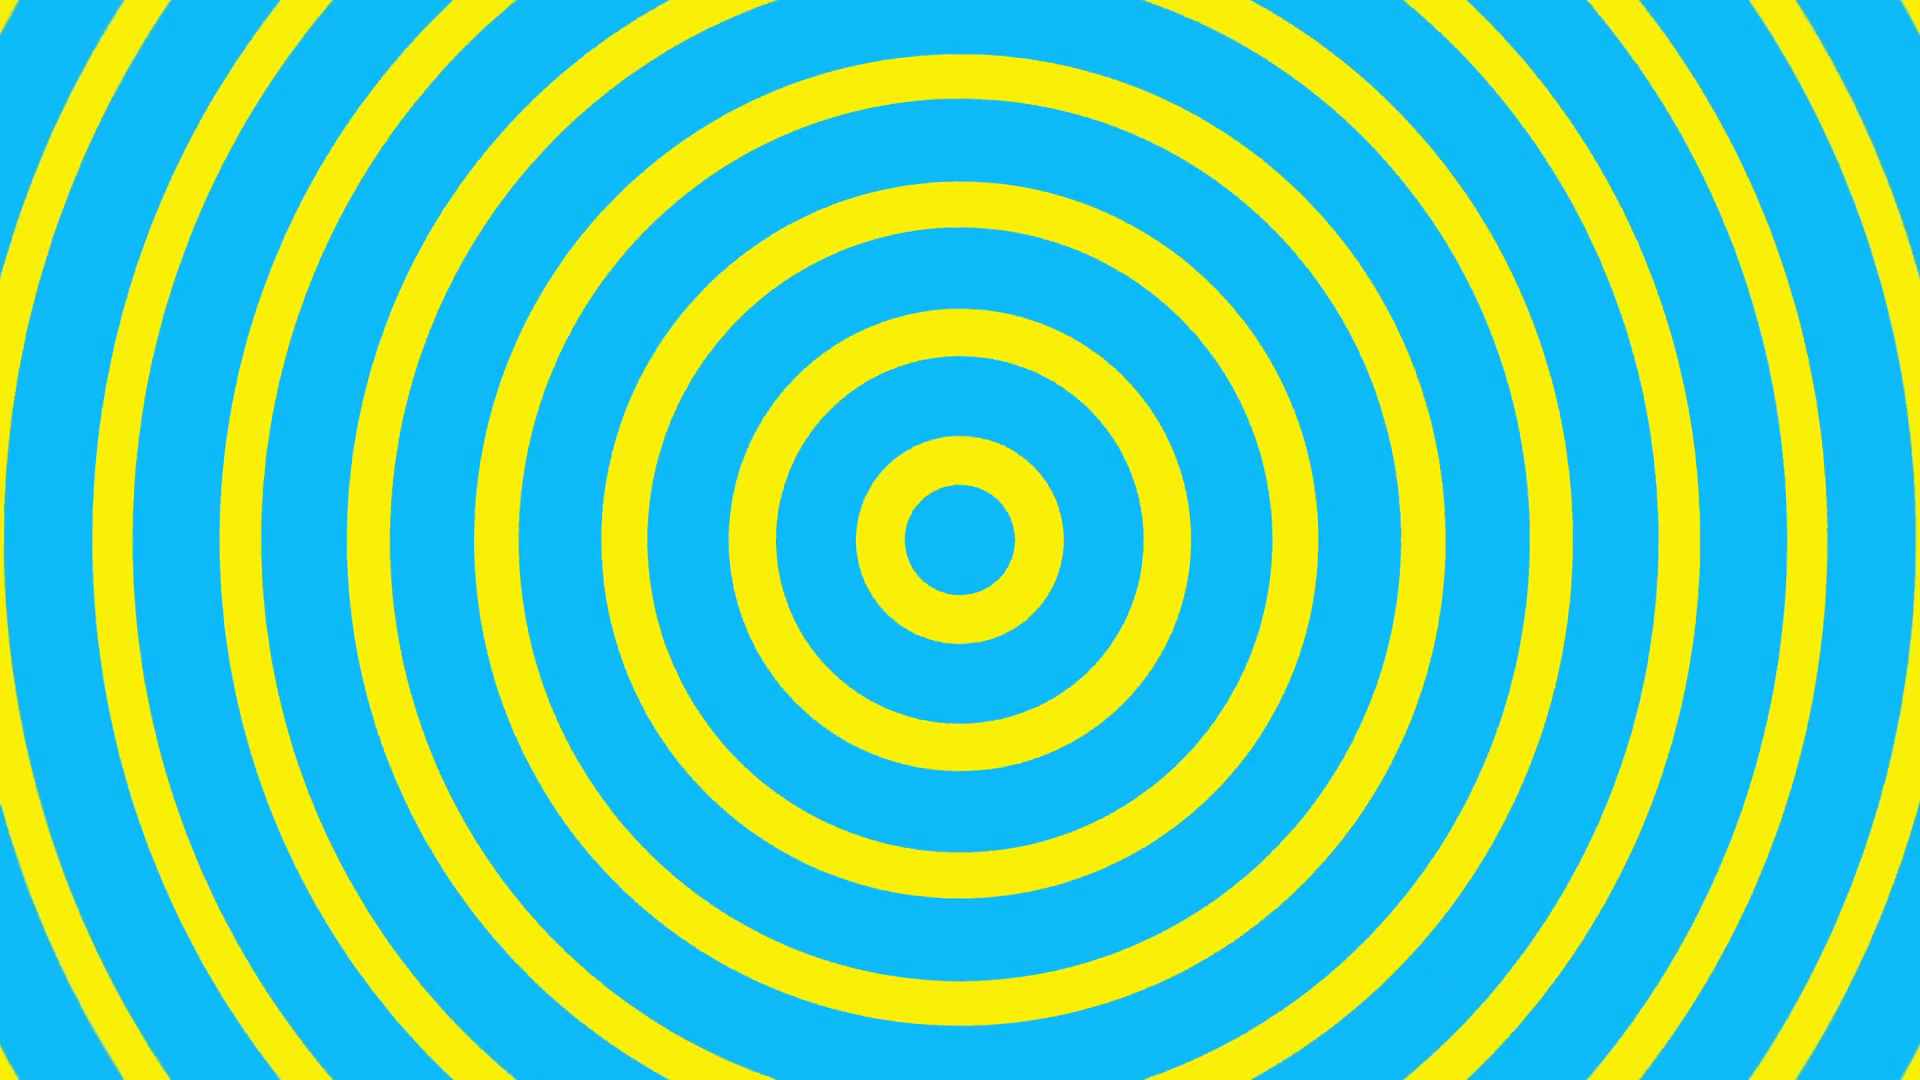 Circular radial hypnotic background endless loop Blue Motion